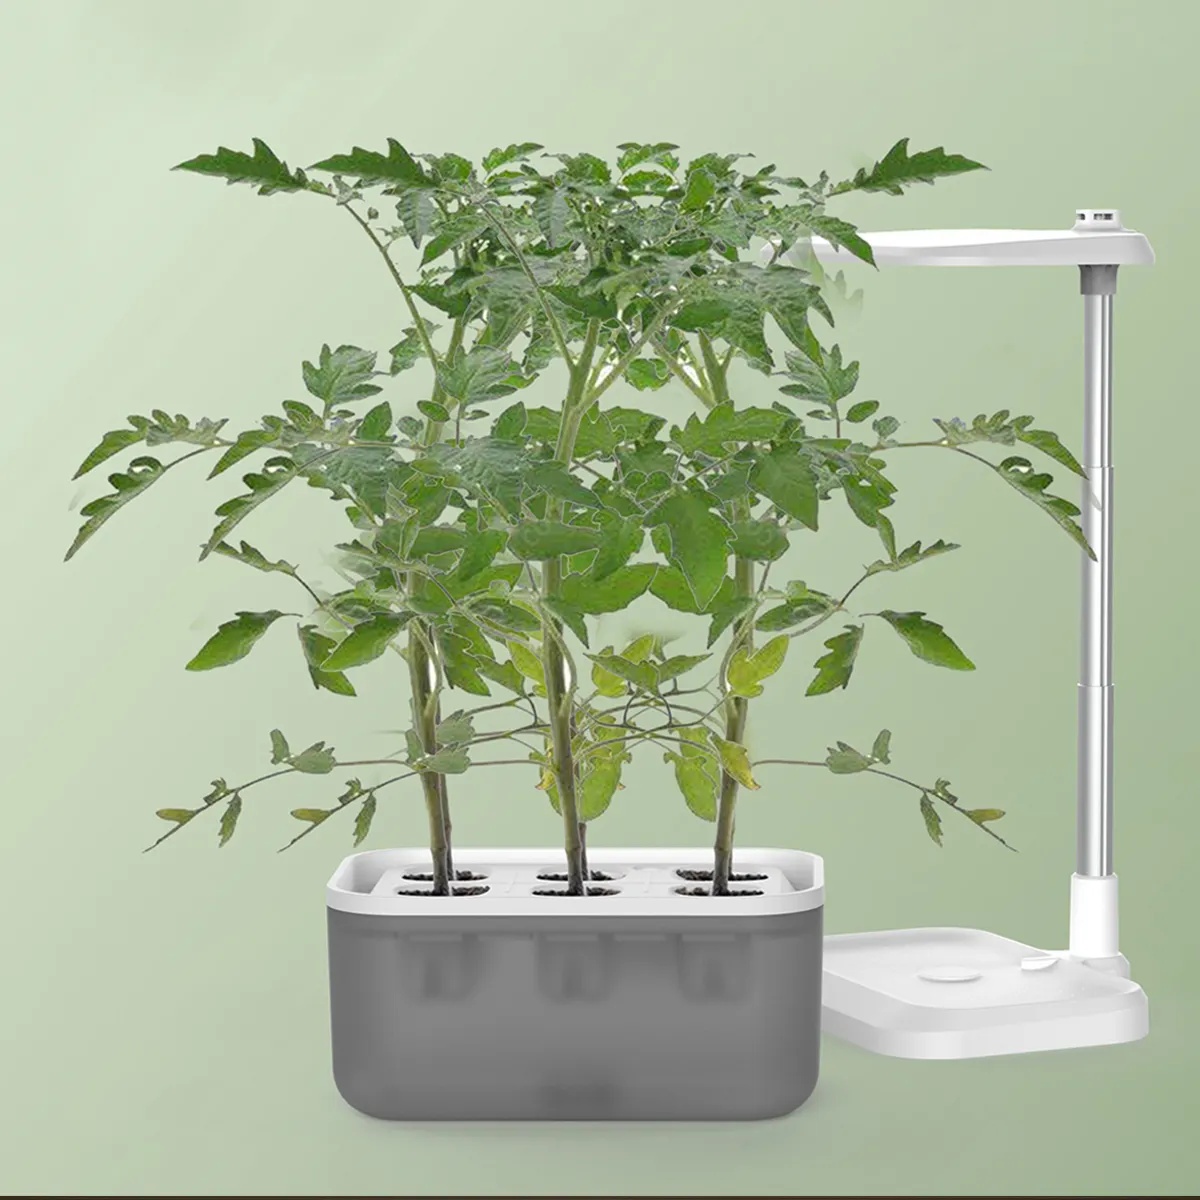 Oem personalizzato indoor home smart vertical mini garden green hydroponics kit LED Grow Light smart pots & fioriere per la casa